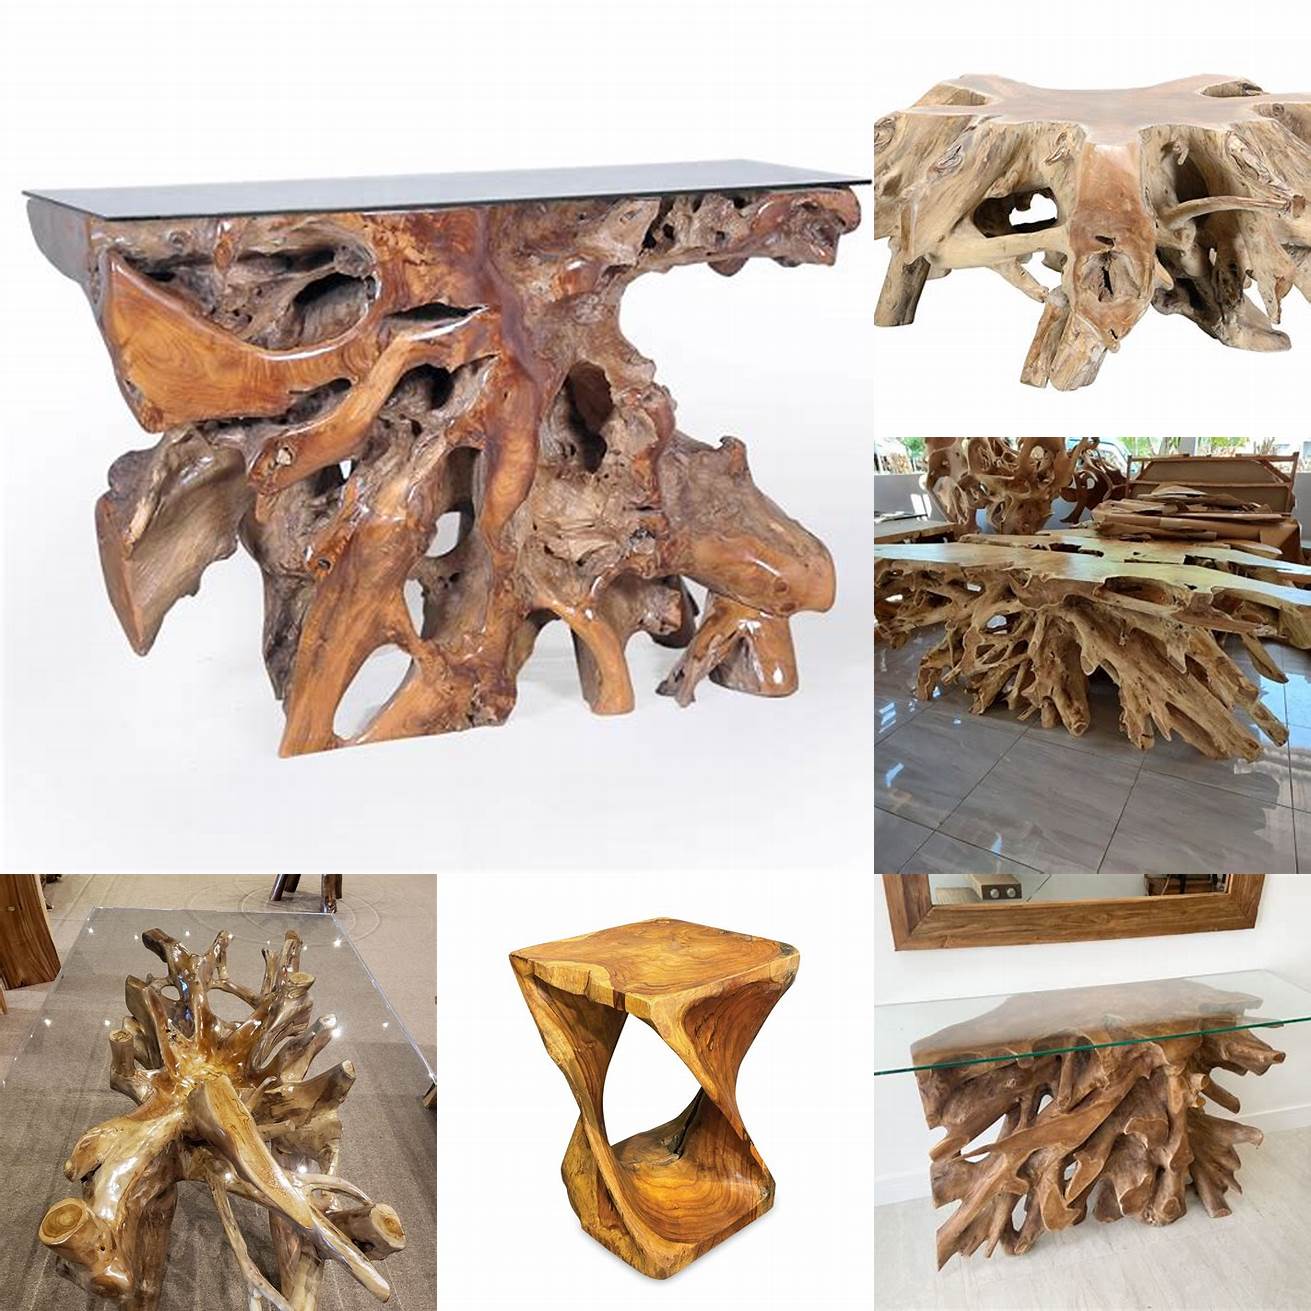 Teak root furniture close-up images